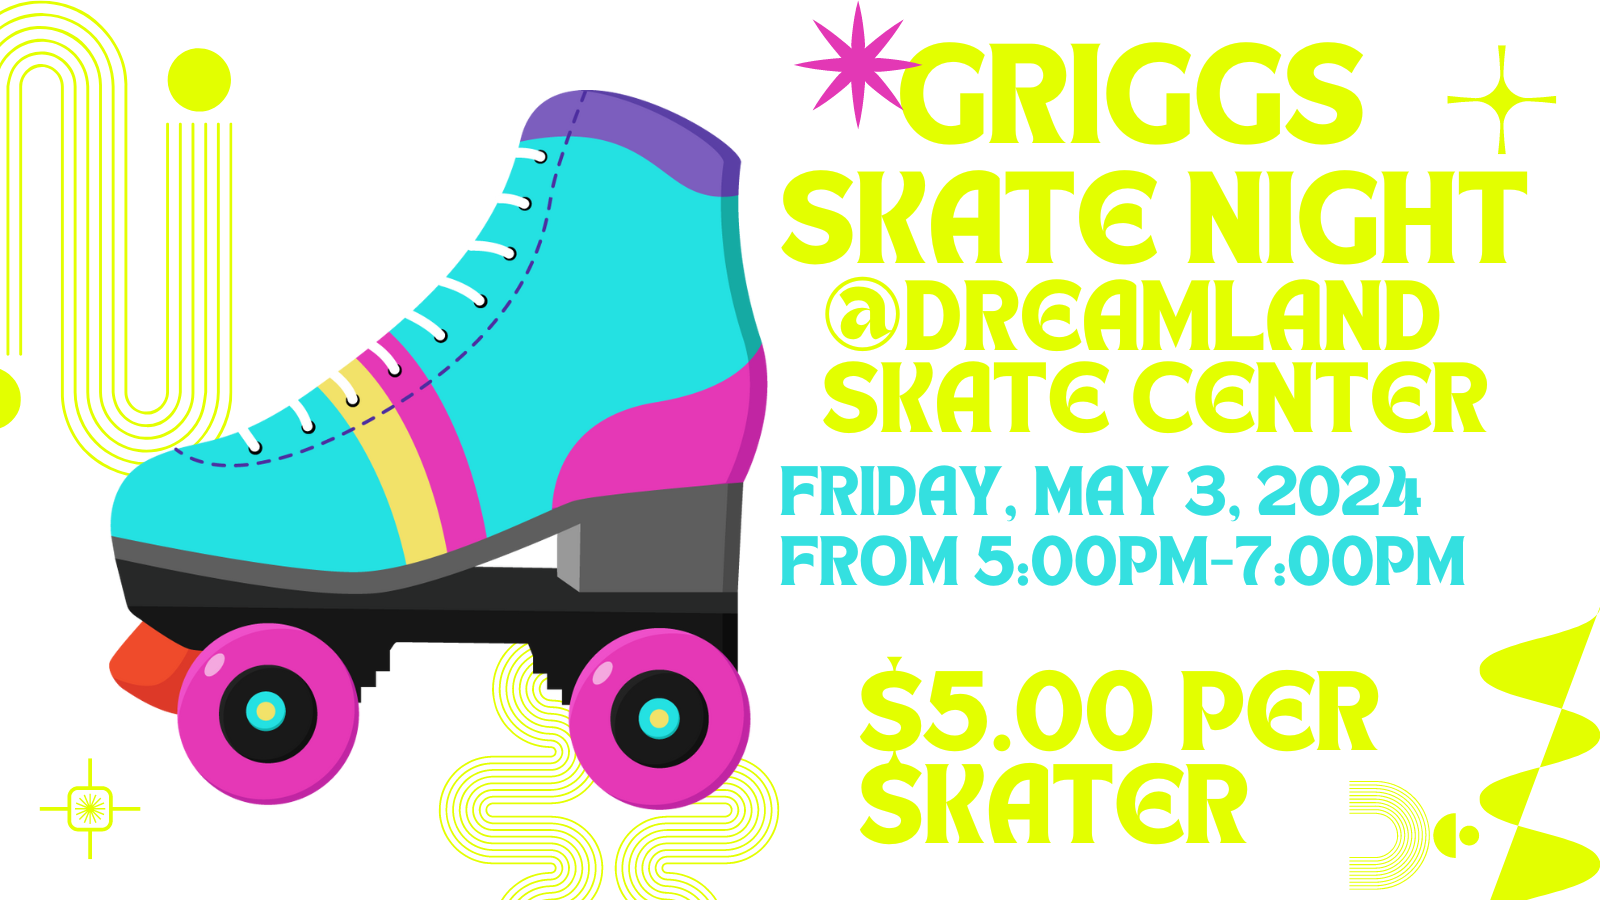 Skate night flyer in English